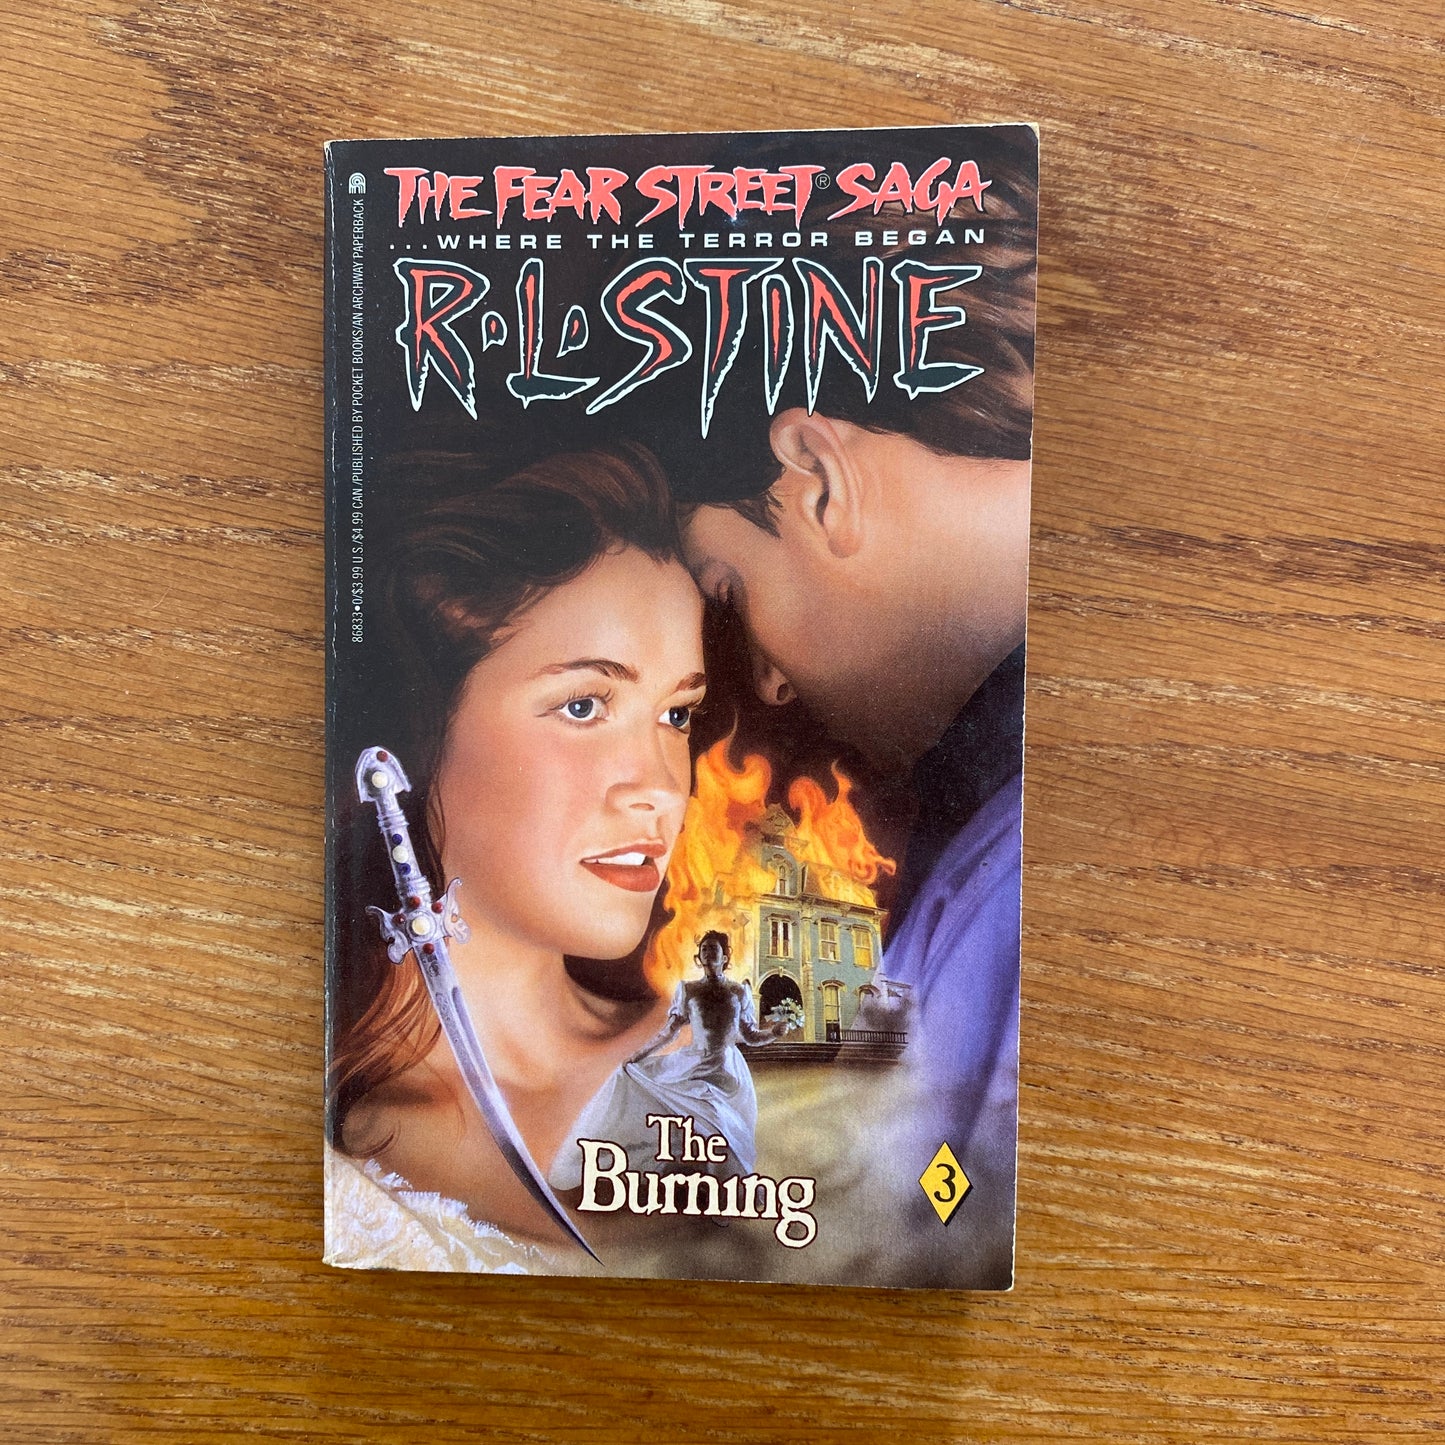 R.L Stine - The Fear Street Saga: The Burning